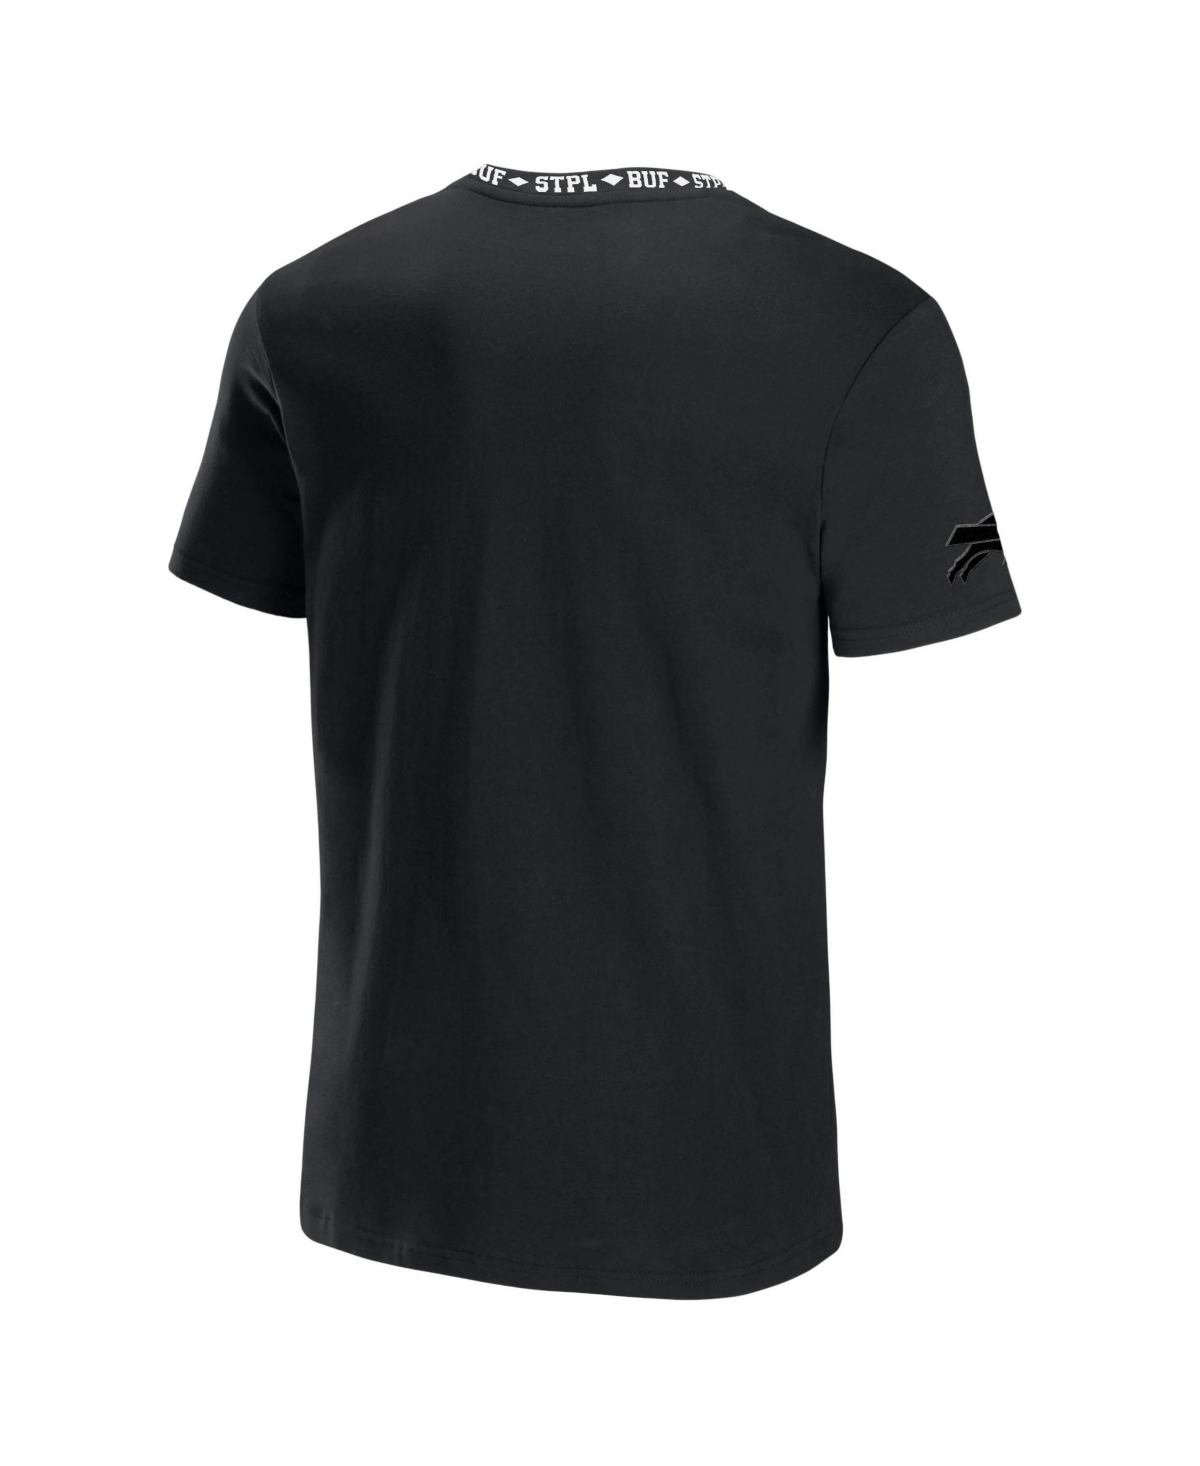 Shop Nfl Properties Men's Nfl X Staple Black Buffalo Bills Embroidered Fundementals Globe Short Sleeve T-shirt